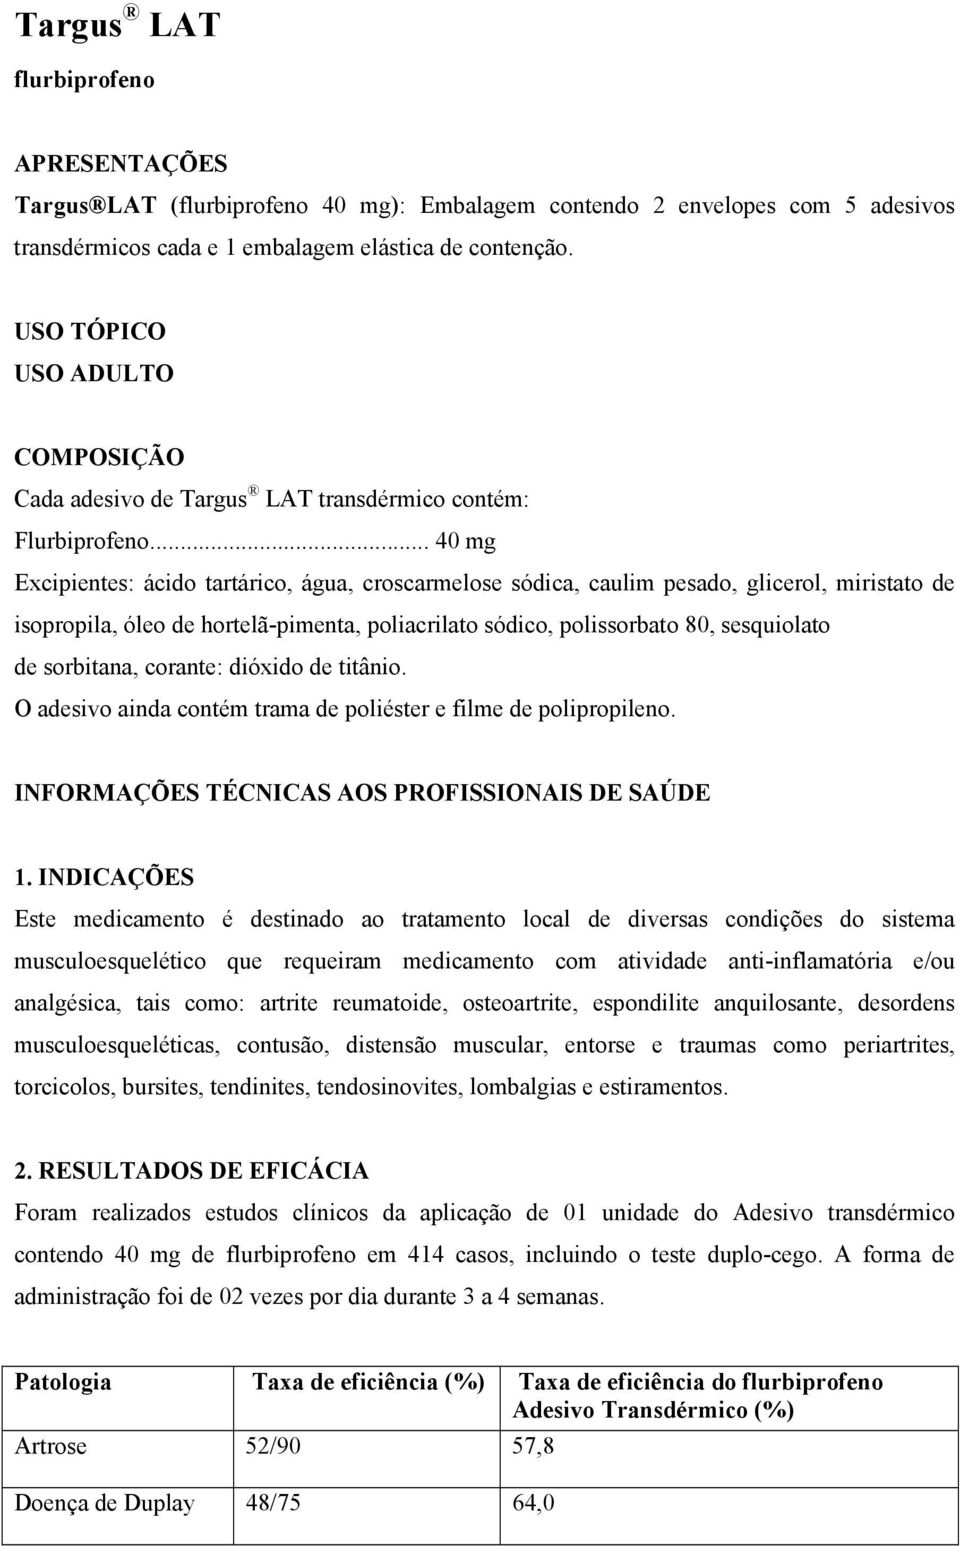 Targus LAT. Laboratórios Bagó do Brasil S.A. Adesivo Transdérmico.  Flurbiprofeno 40 mg - PDF Free Download